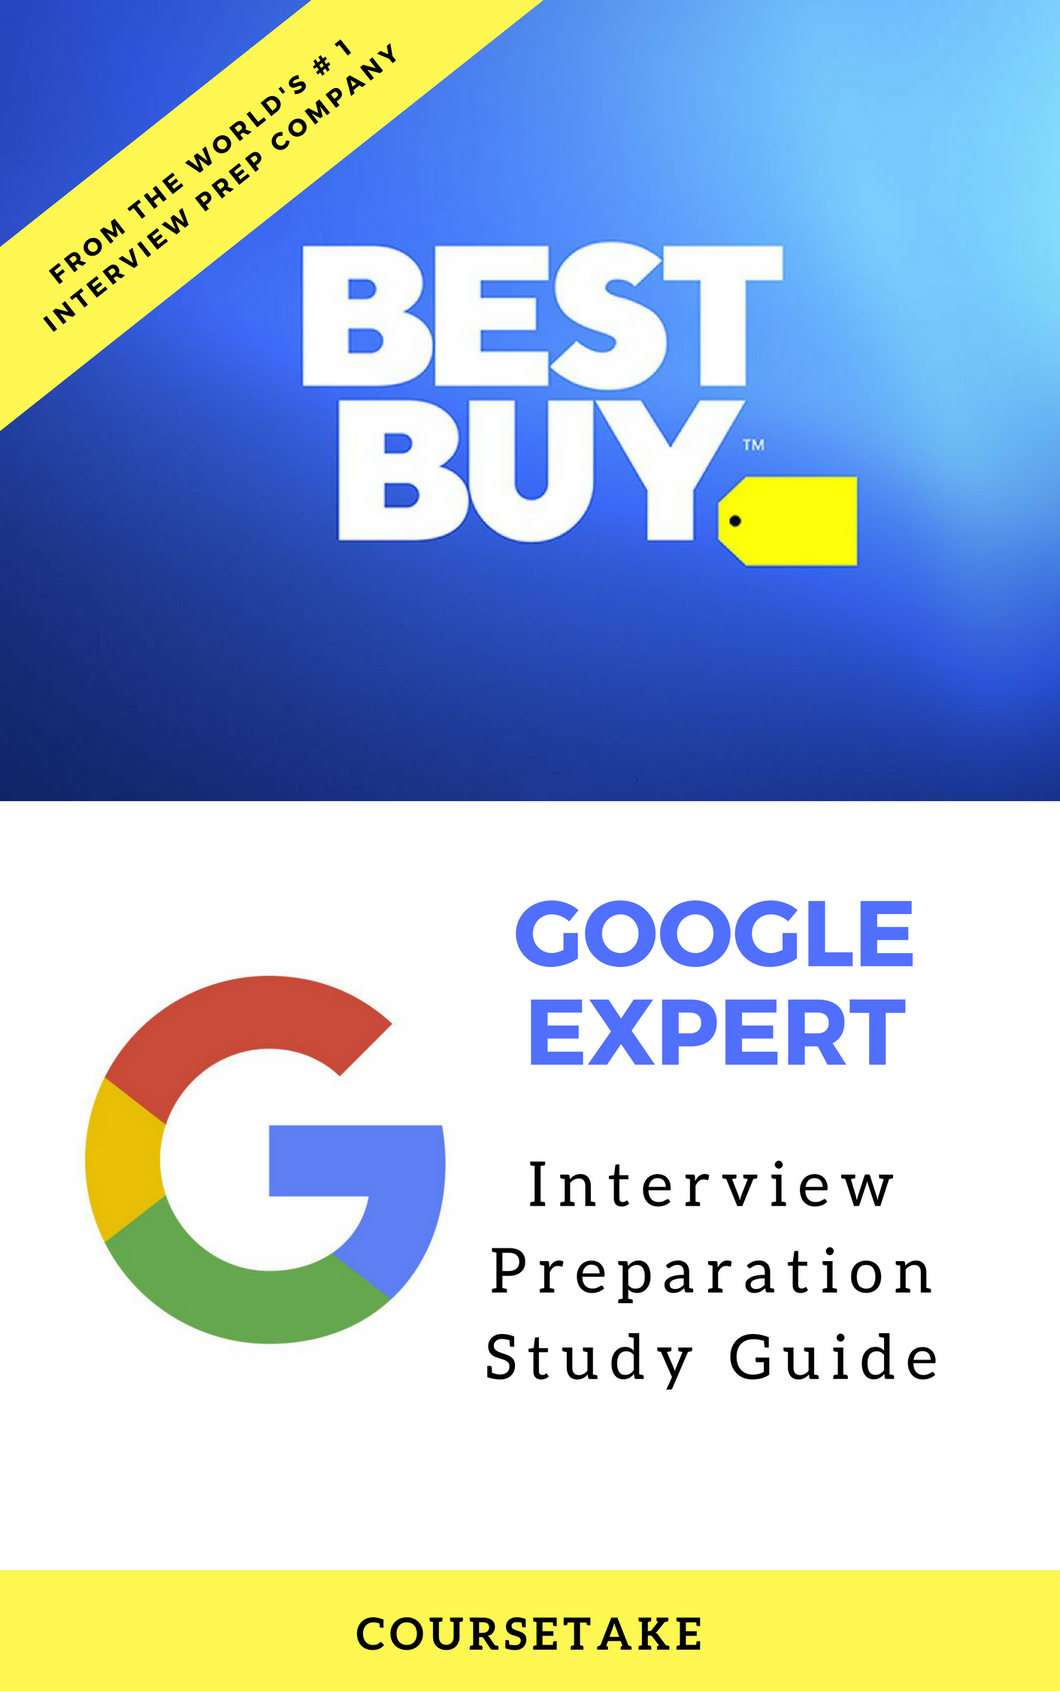 Best Buy Google Expert Interview Preparation Study Guide